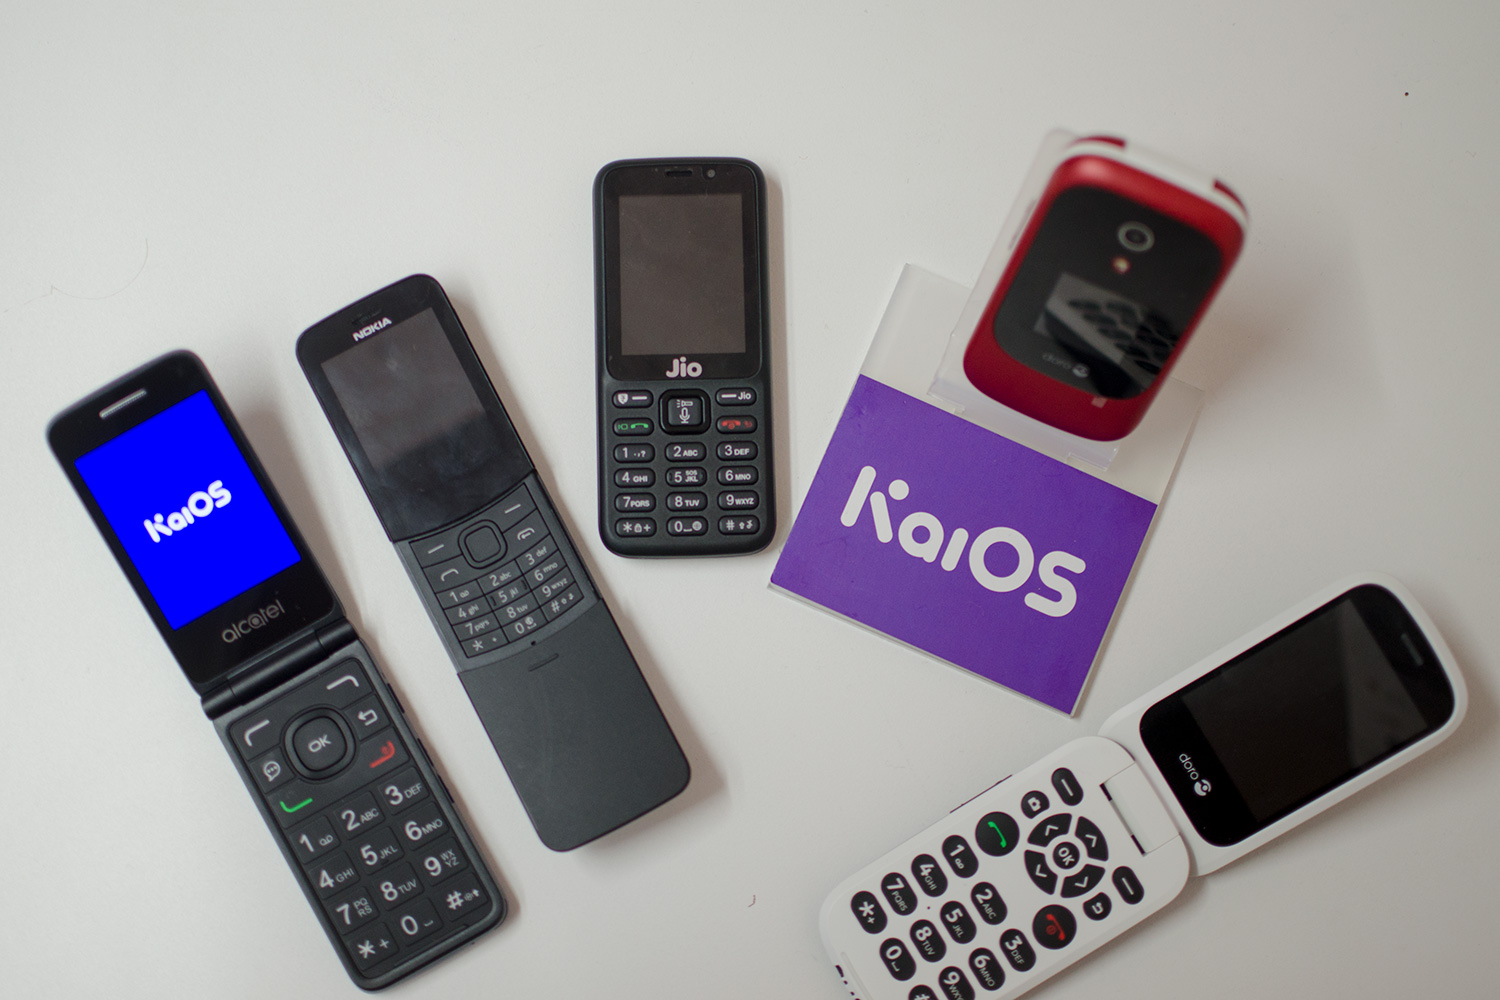 KaiOS phones